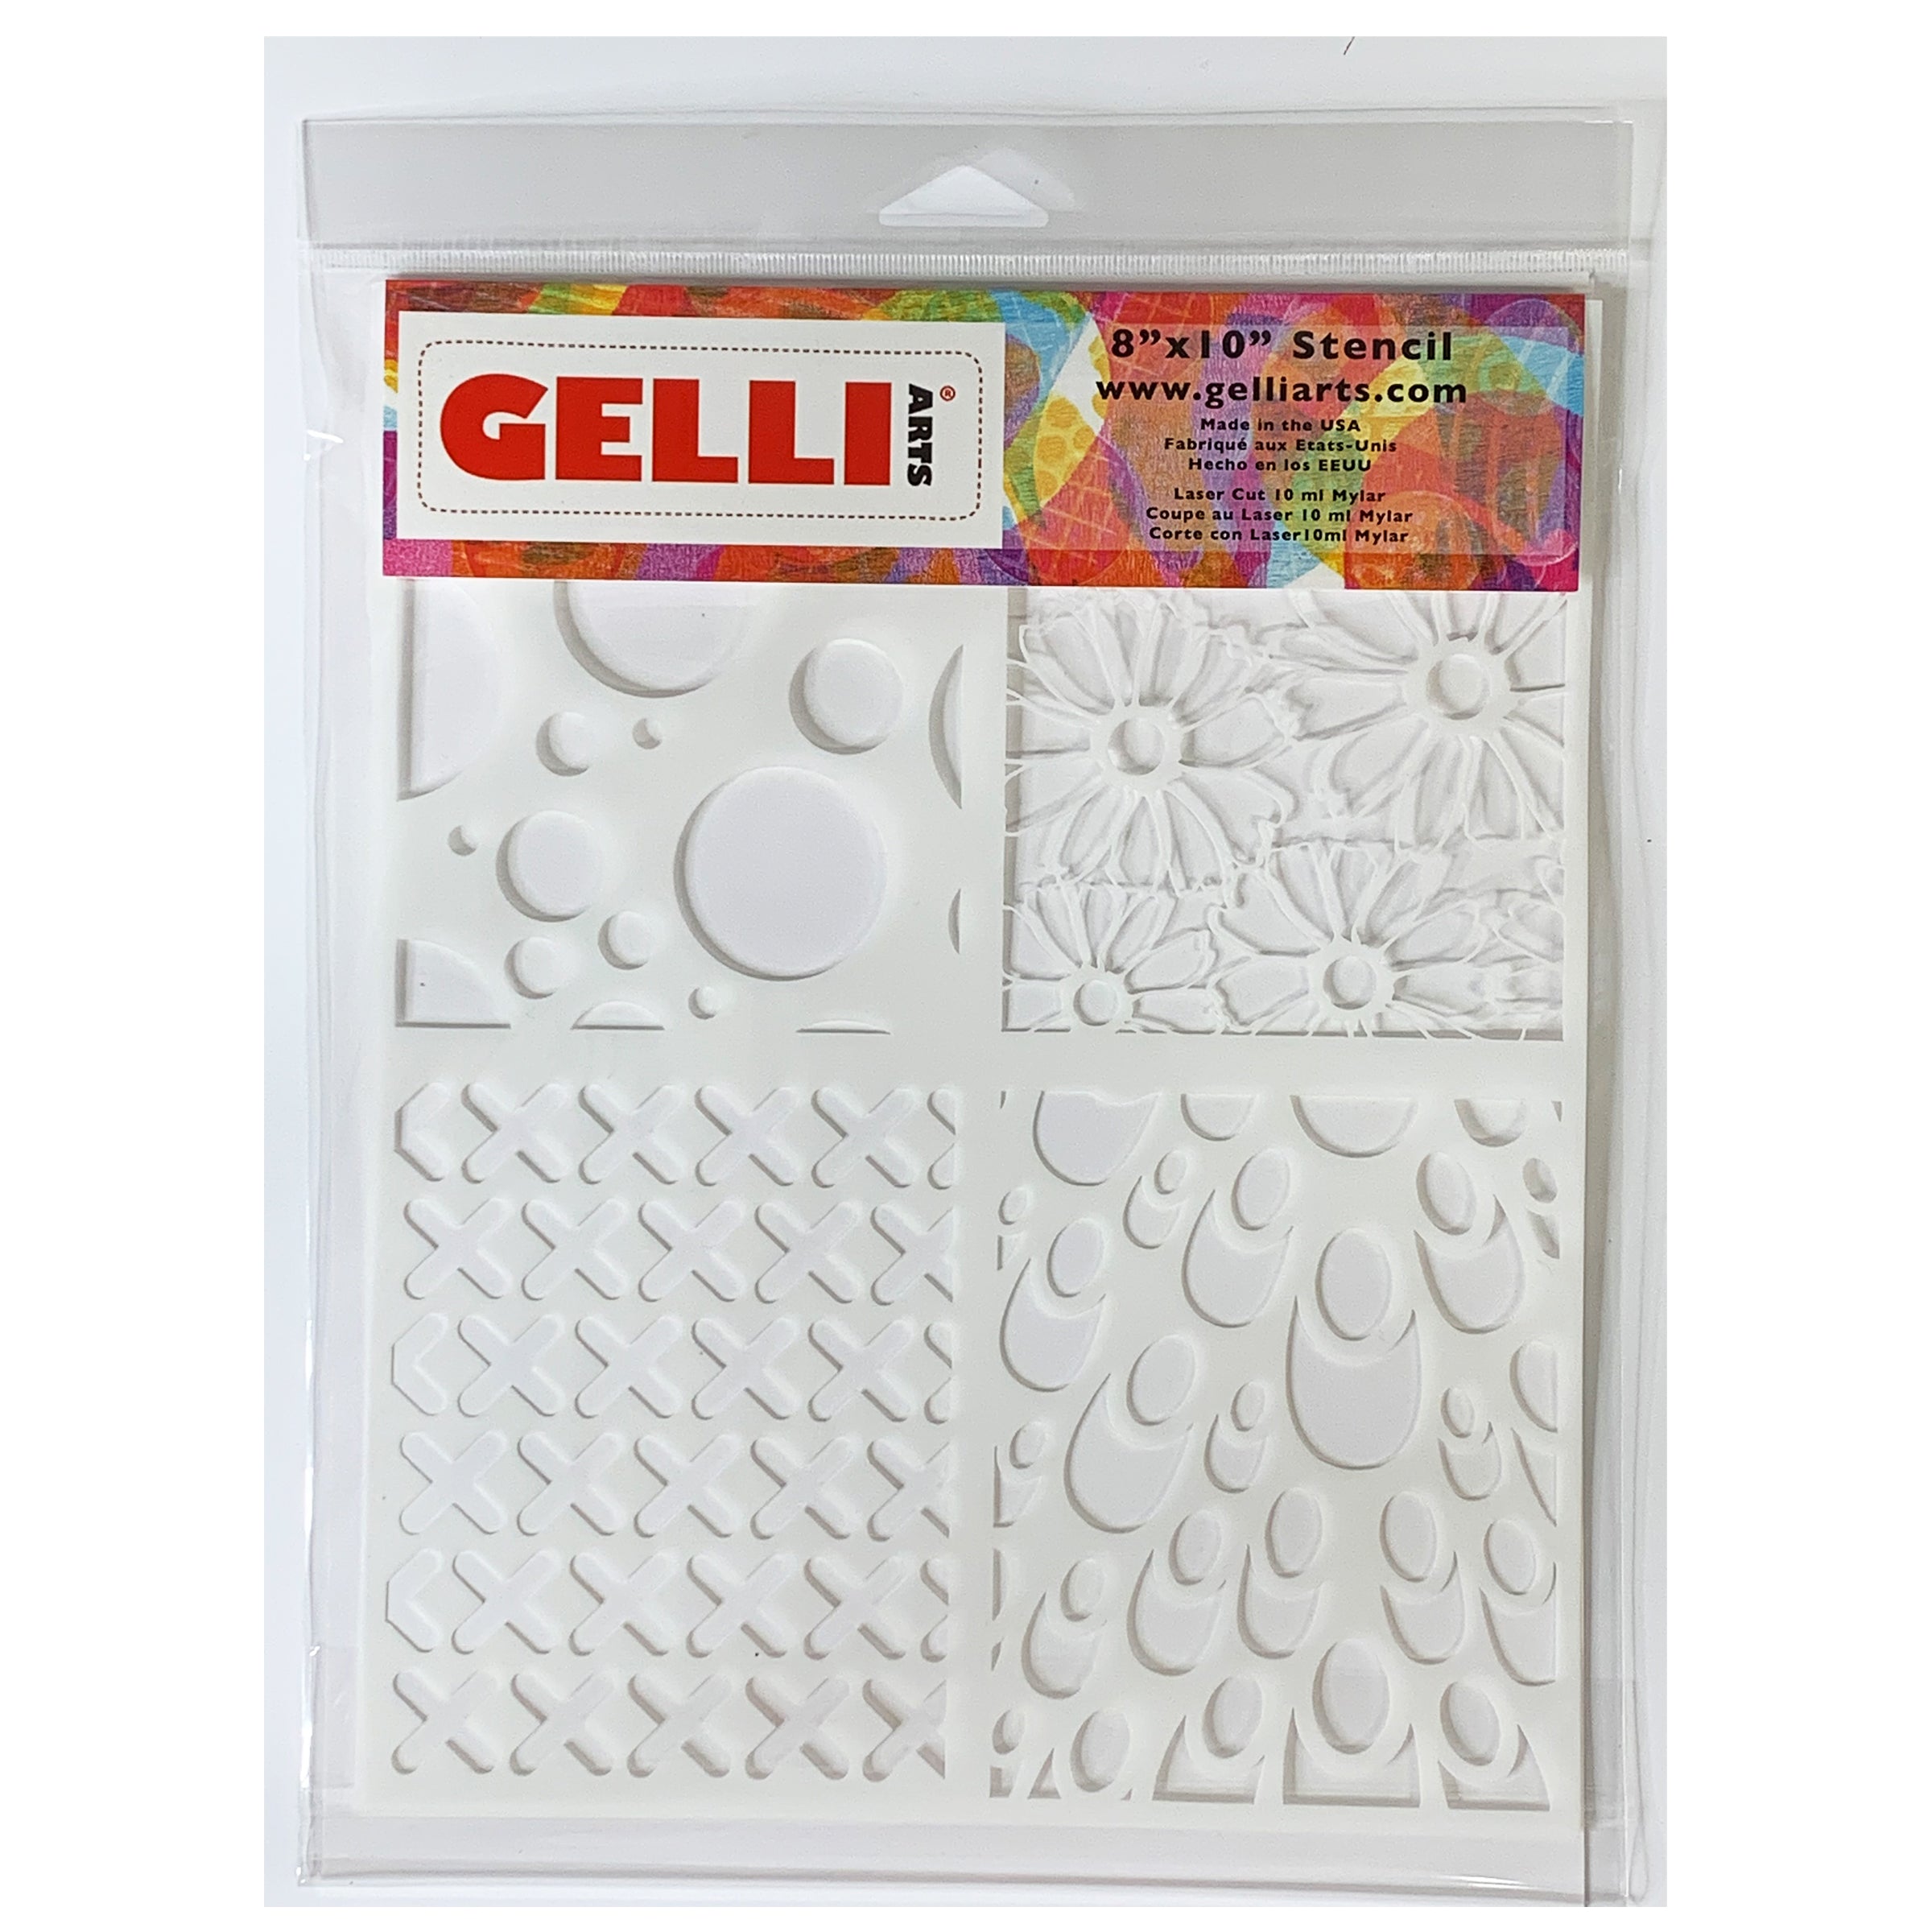 8 x 10 Gelli® Printing Plate